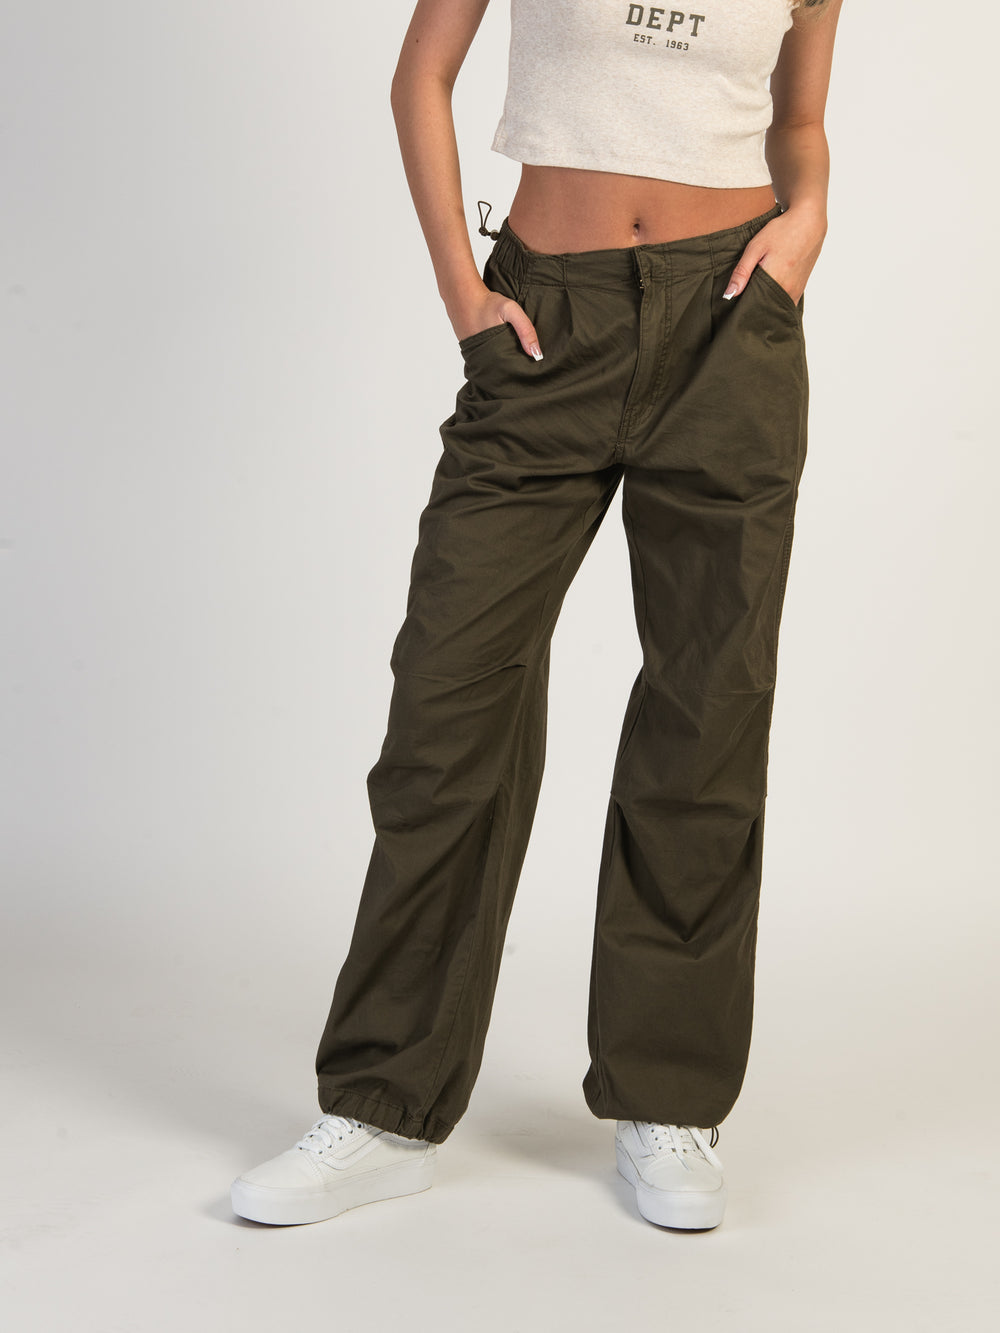 Women's Low Rise Wide Leg Cargo Pants in Surplus Goods Olive Green